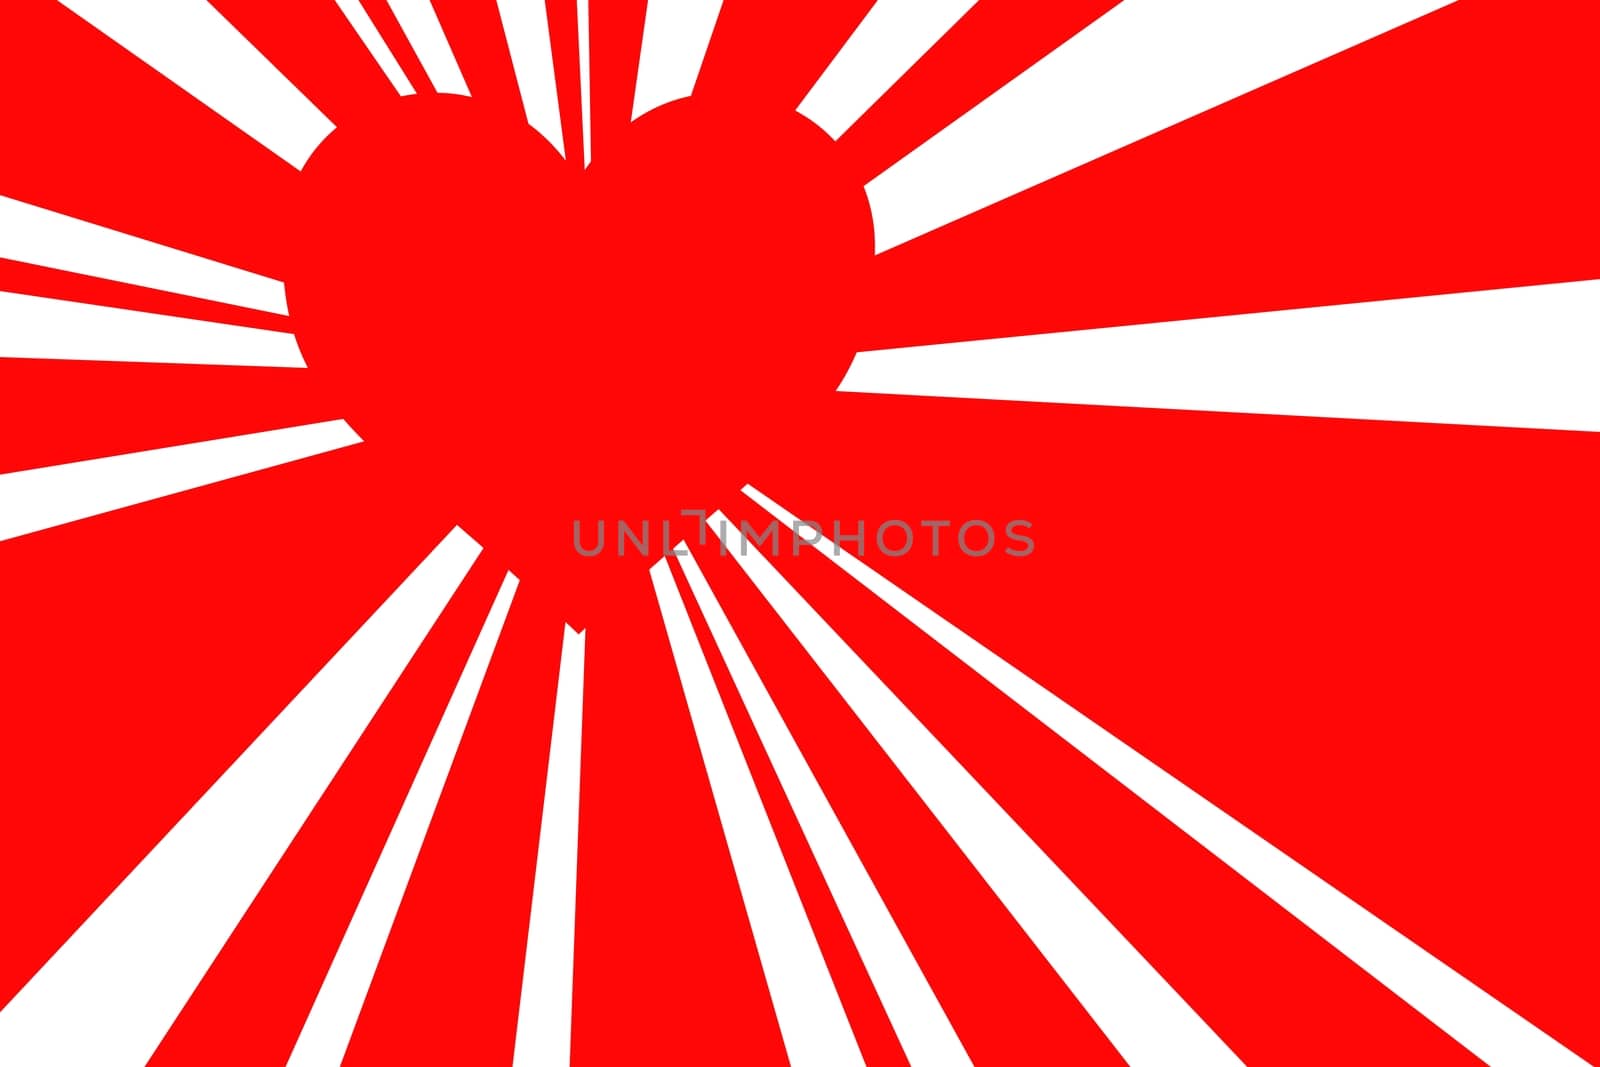 red retro style sunburst, valentine background with red heart